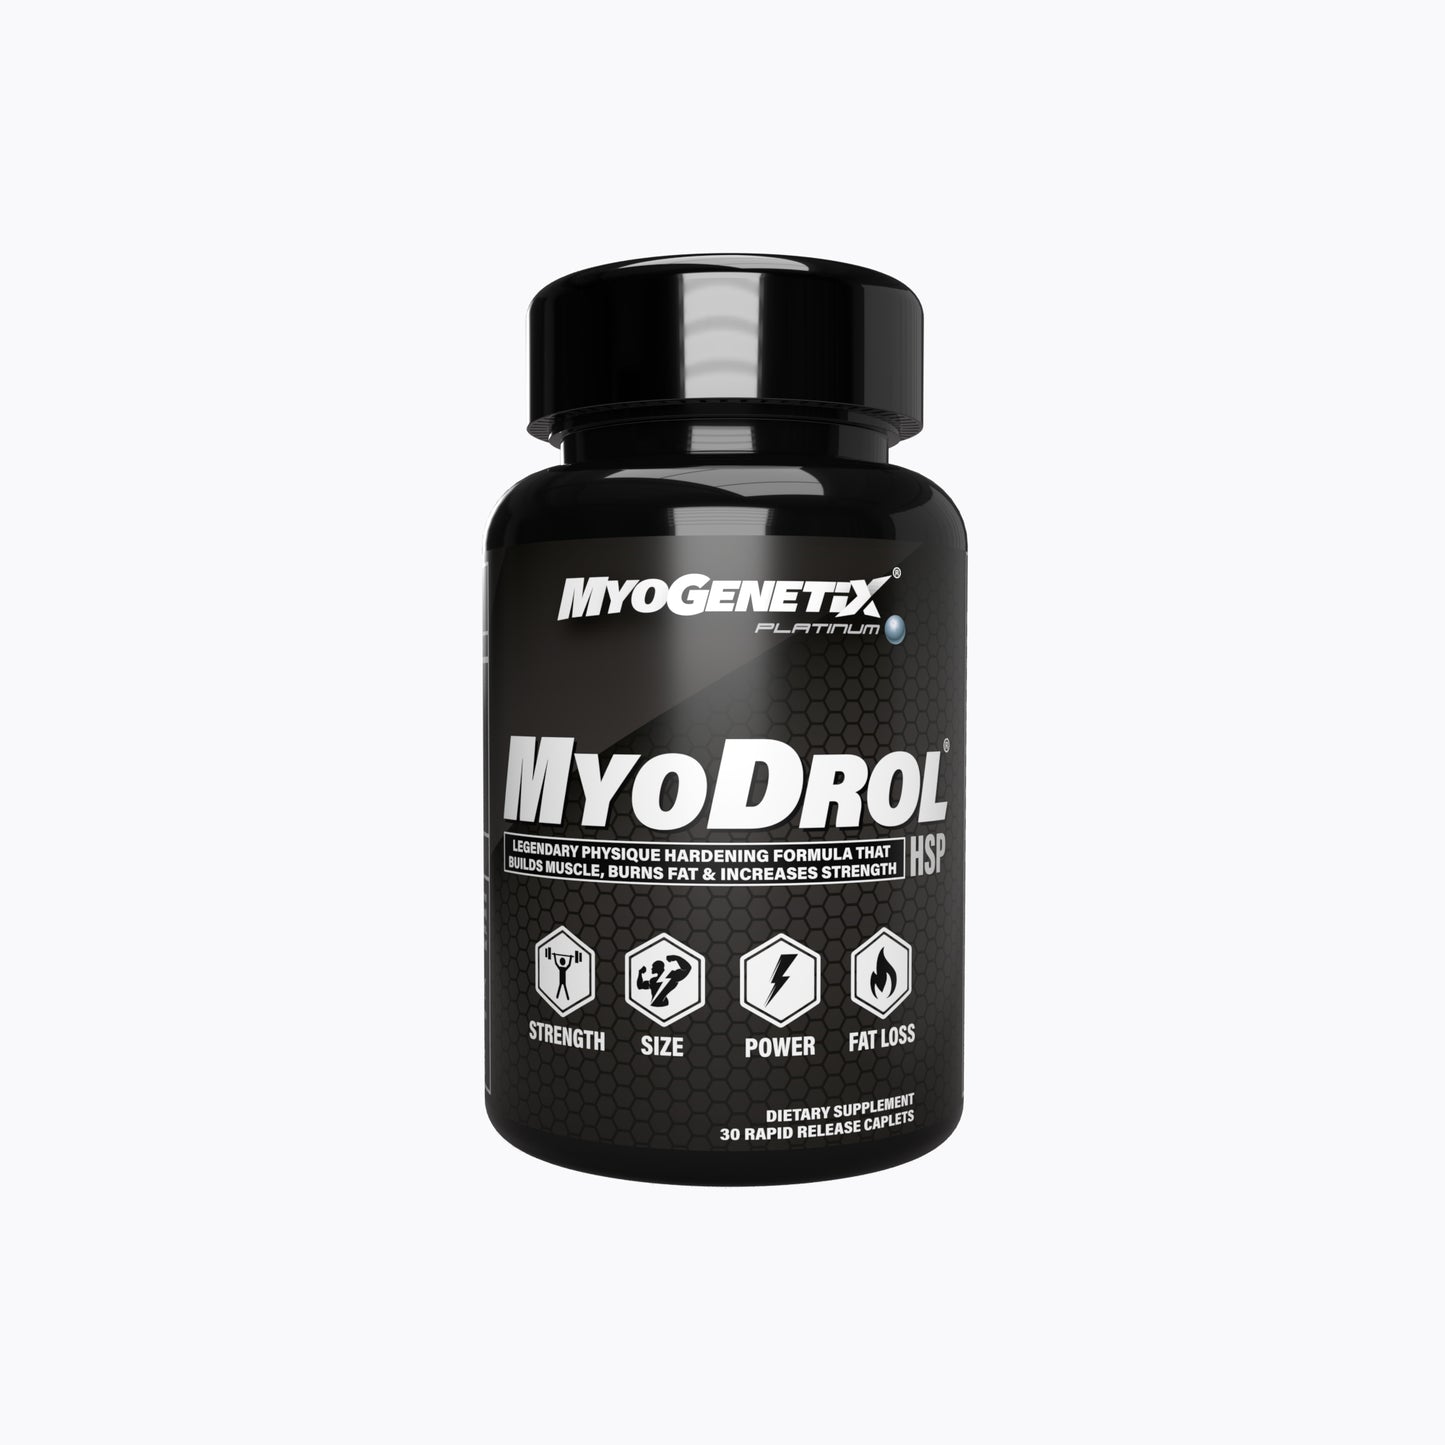 Myogenetix Myodrol, Legendary Muscle building Formula